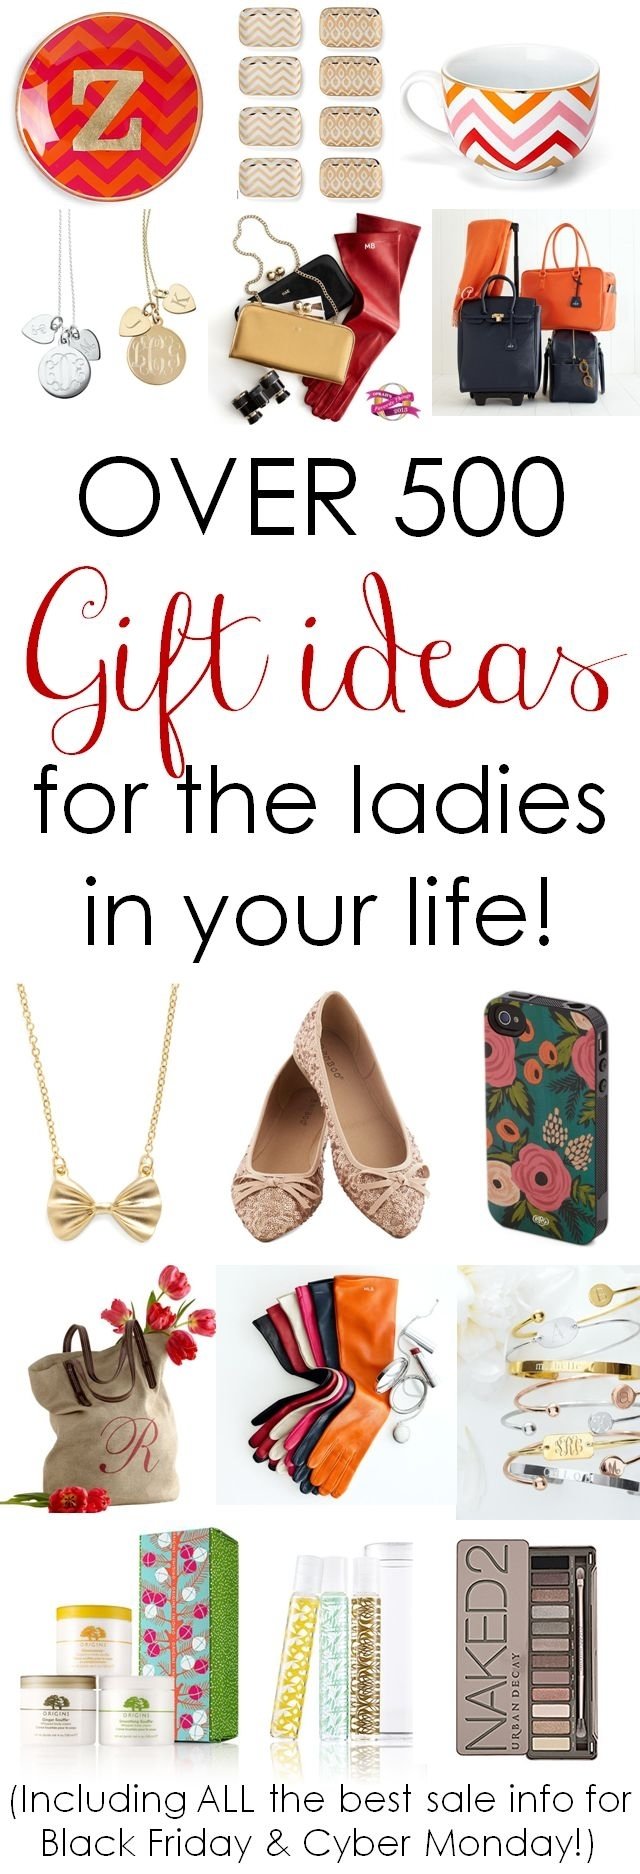 10 Elegant Top Gift Ideas For Women 2013 33 best deals discounts giveaways freebies images on pinterest 2 2022